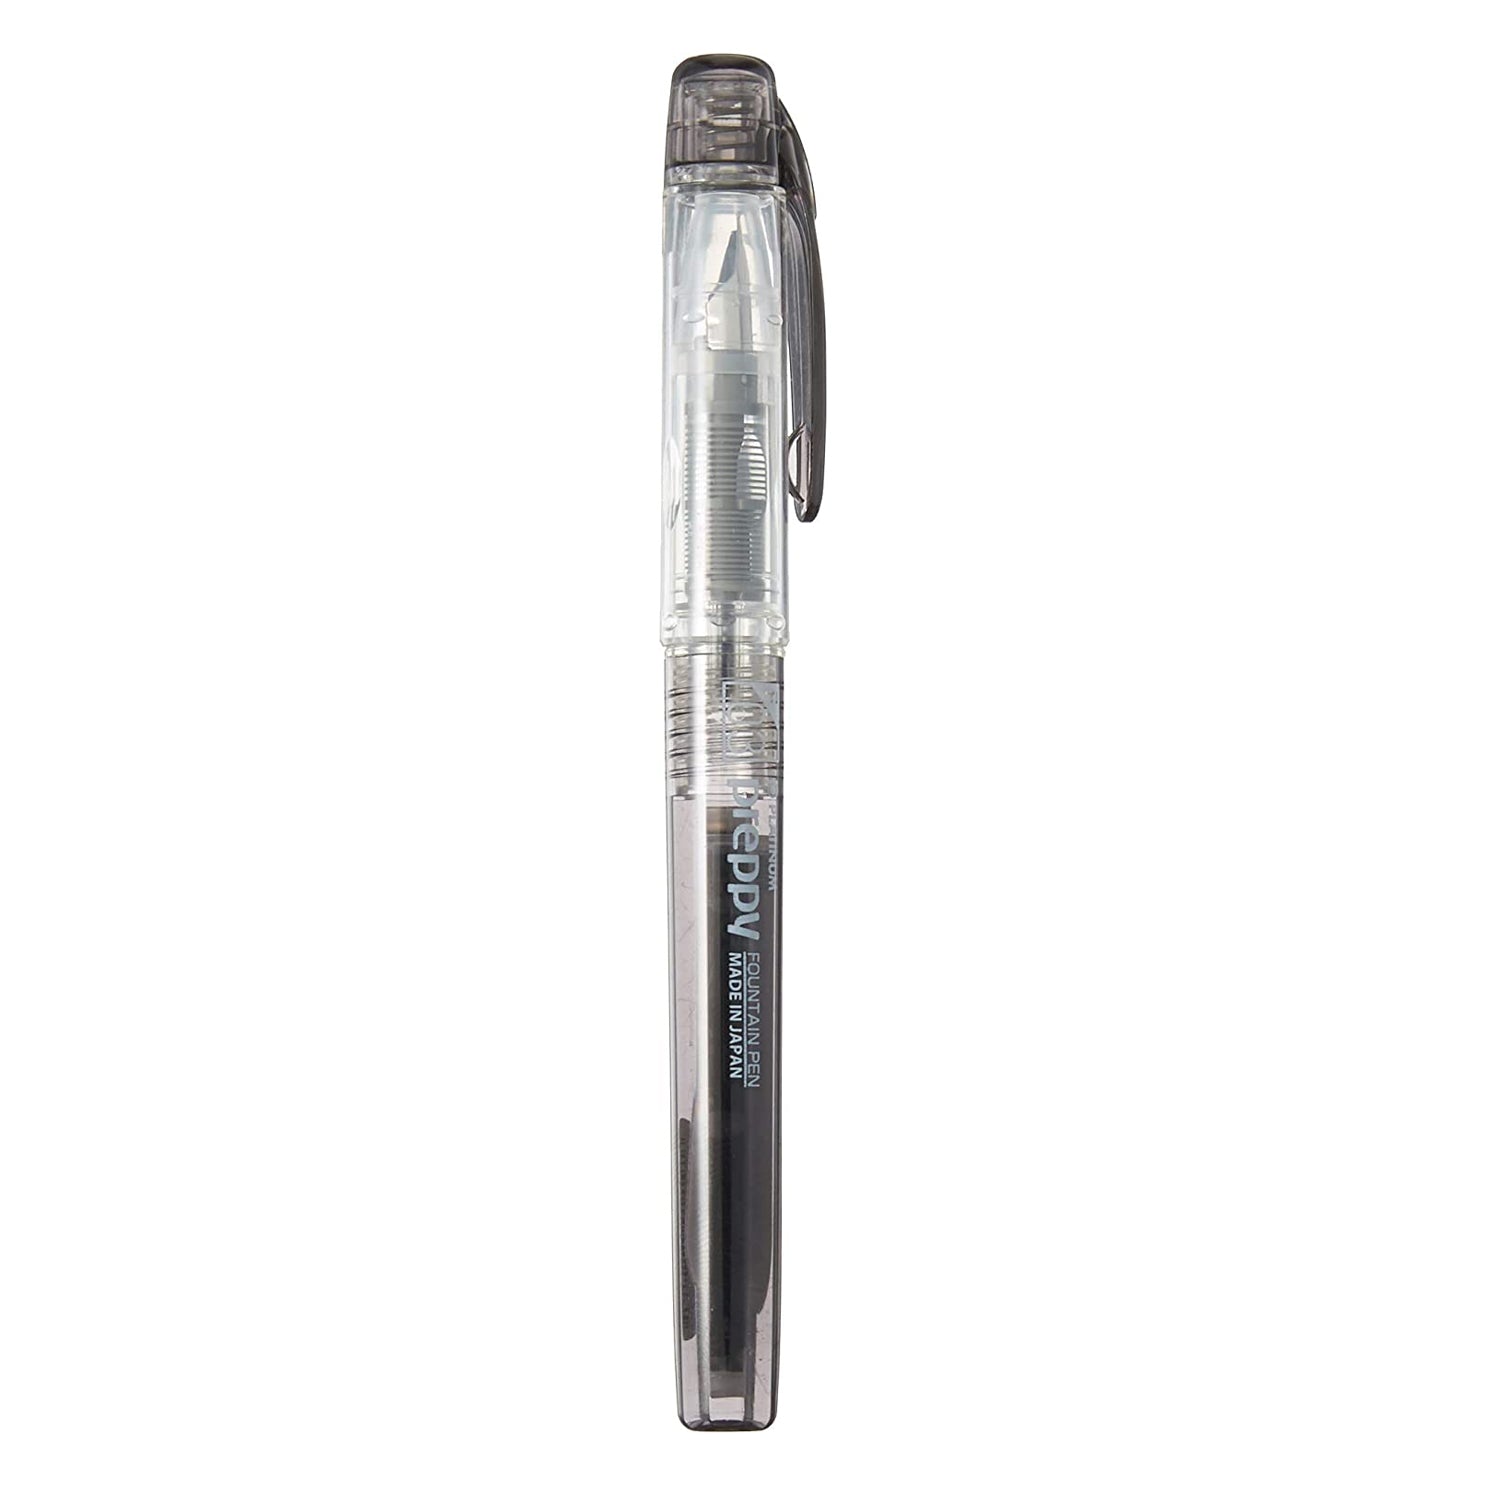 Platinum Preppy Fountain Pen - Crystal - Fine